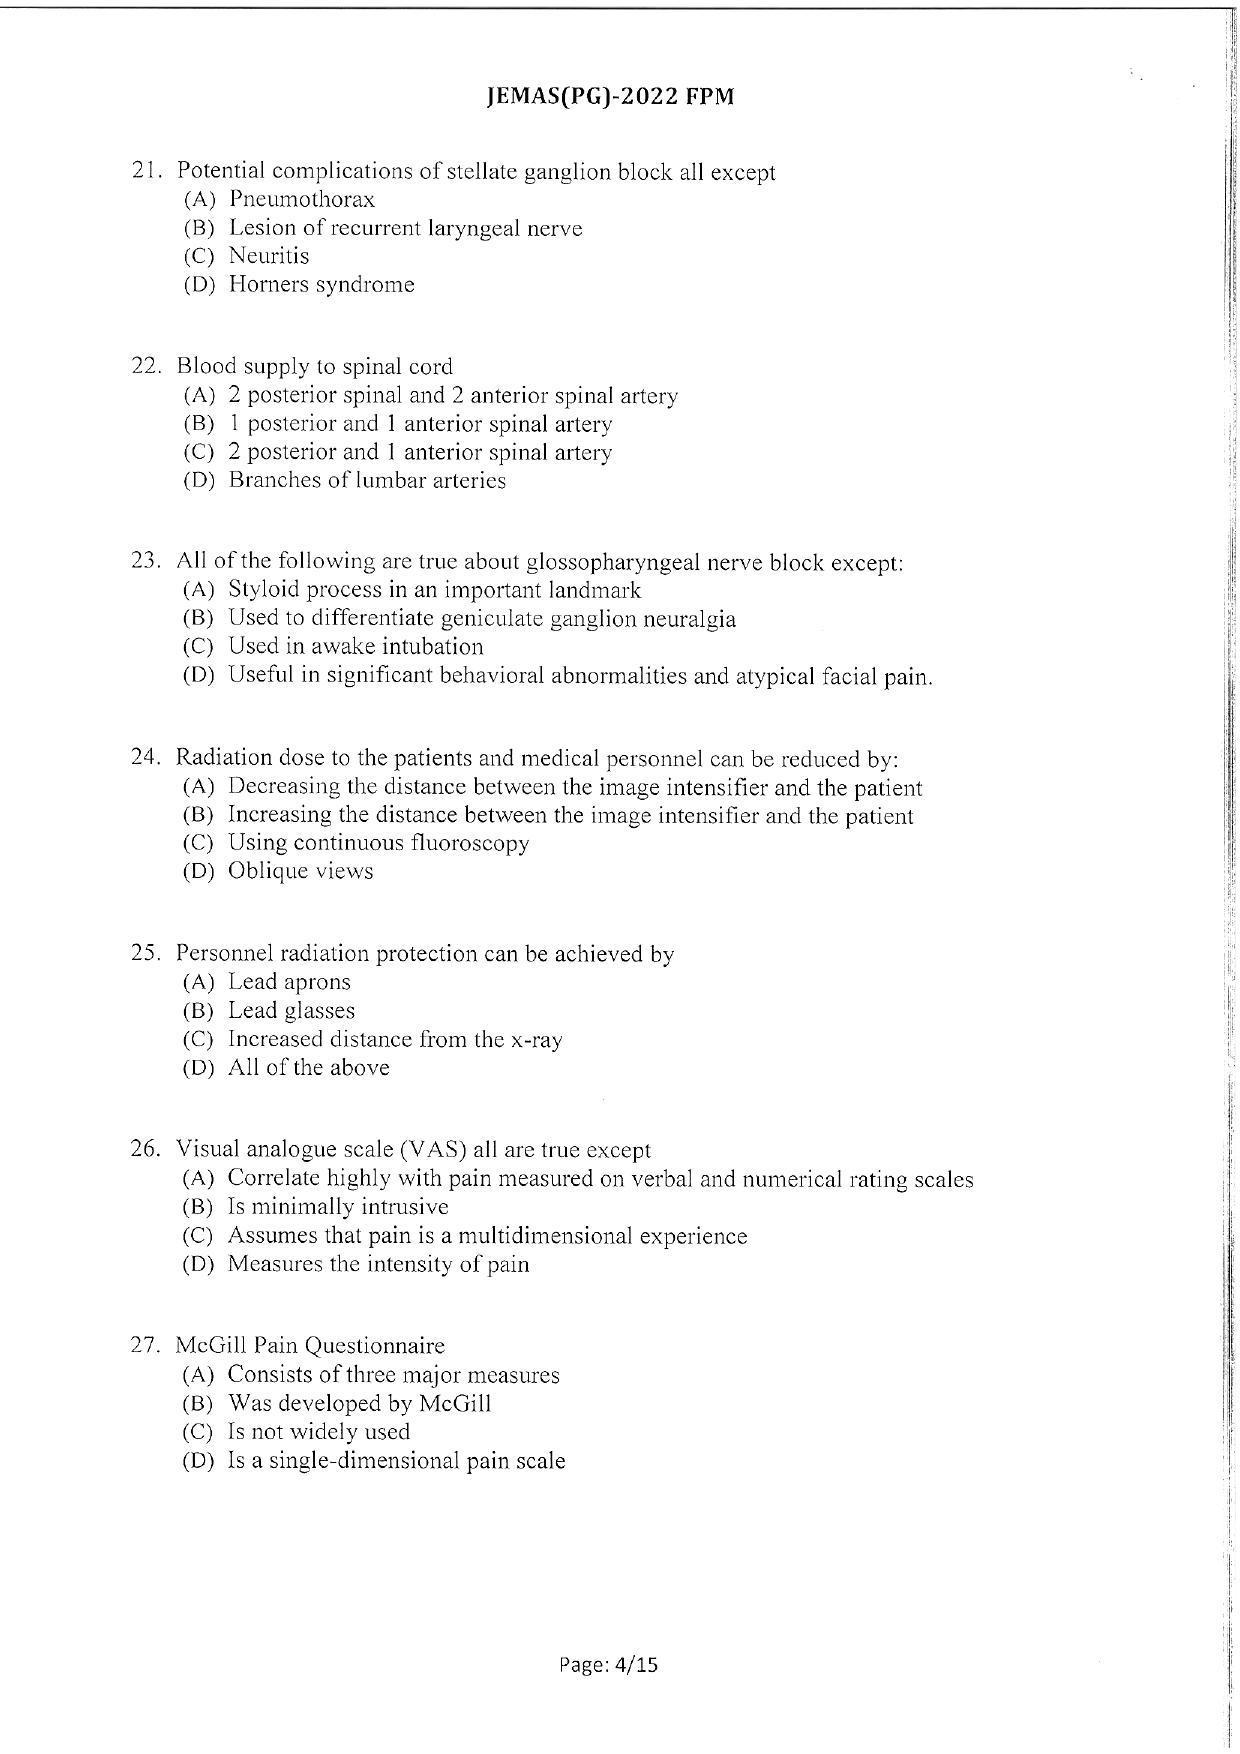 WBJEEB JEMAS (PG) 2022 FPM Question Paper - Page 6